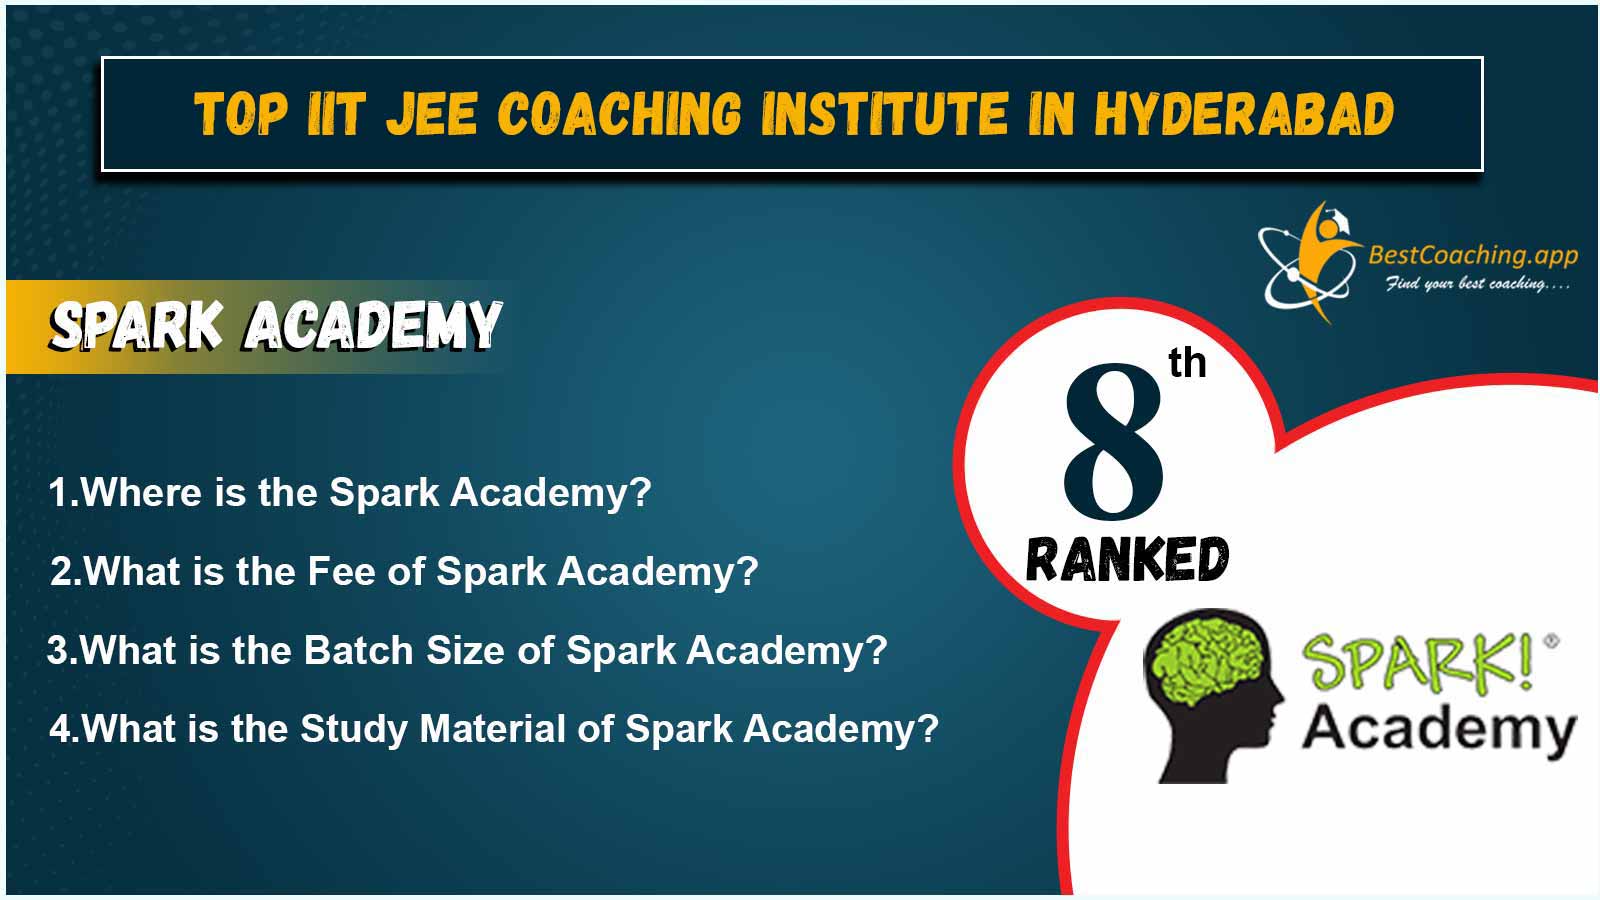 Top IIT JEE Coaching of Hyderabad